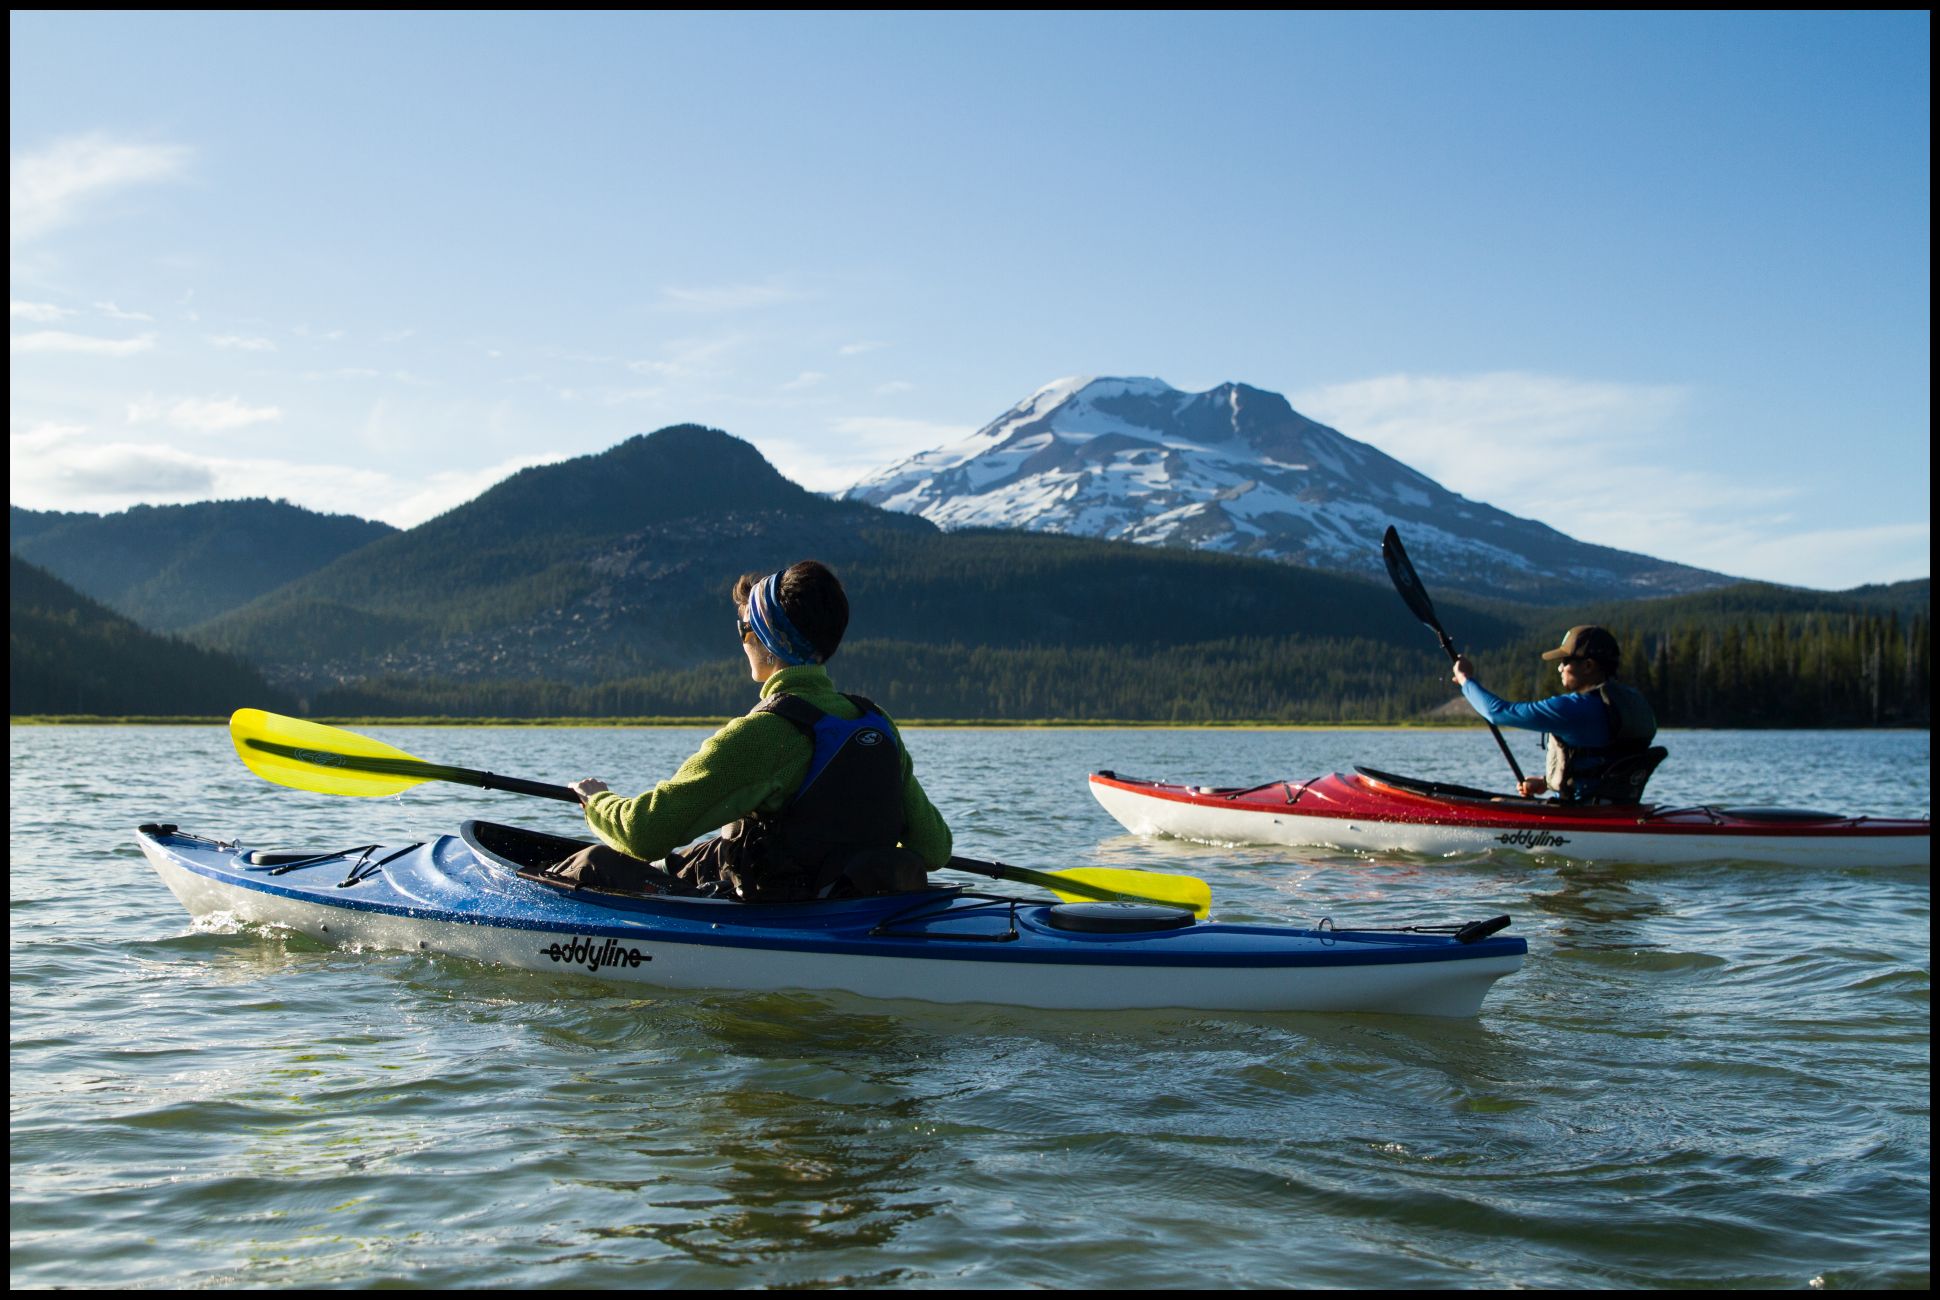 Kayaks: Sandpiper by Eddyline Kayaks - Image 3387